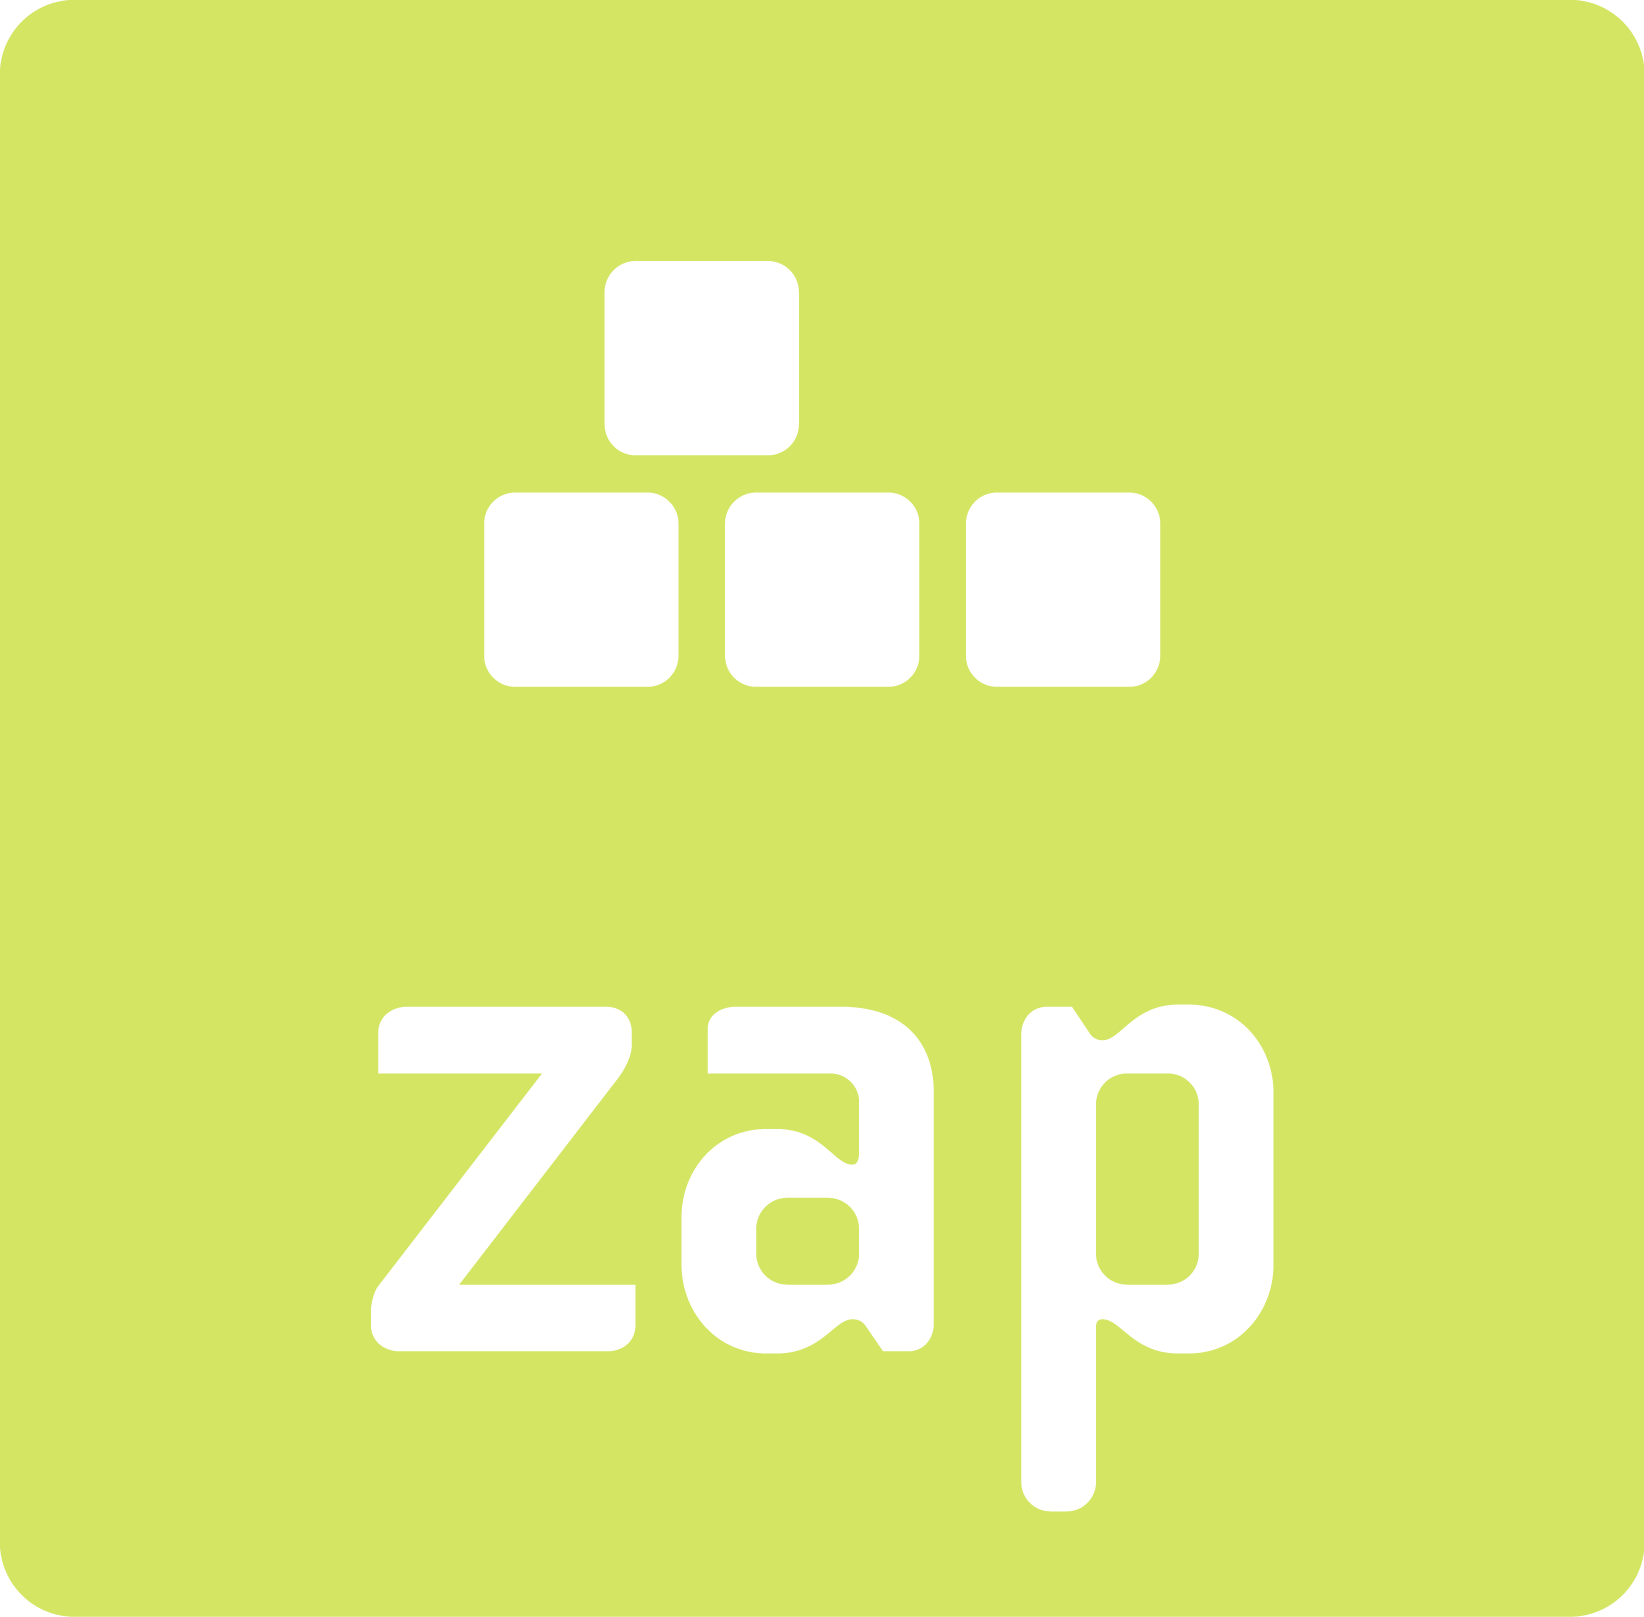 Zap Solutions